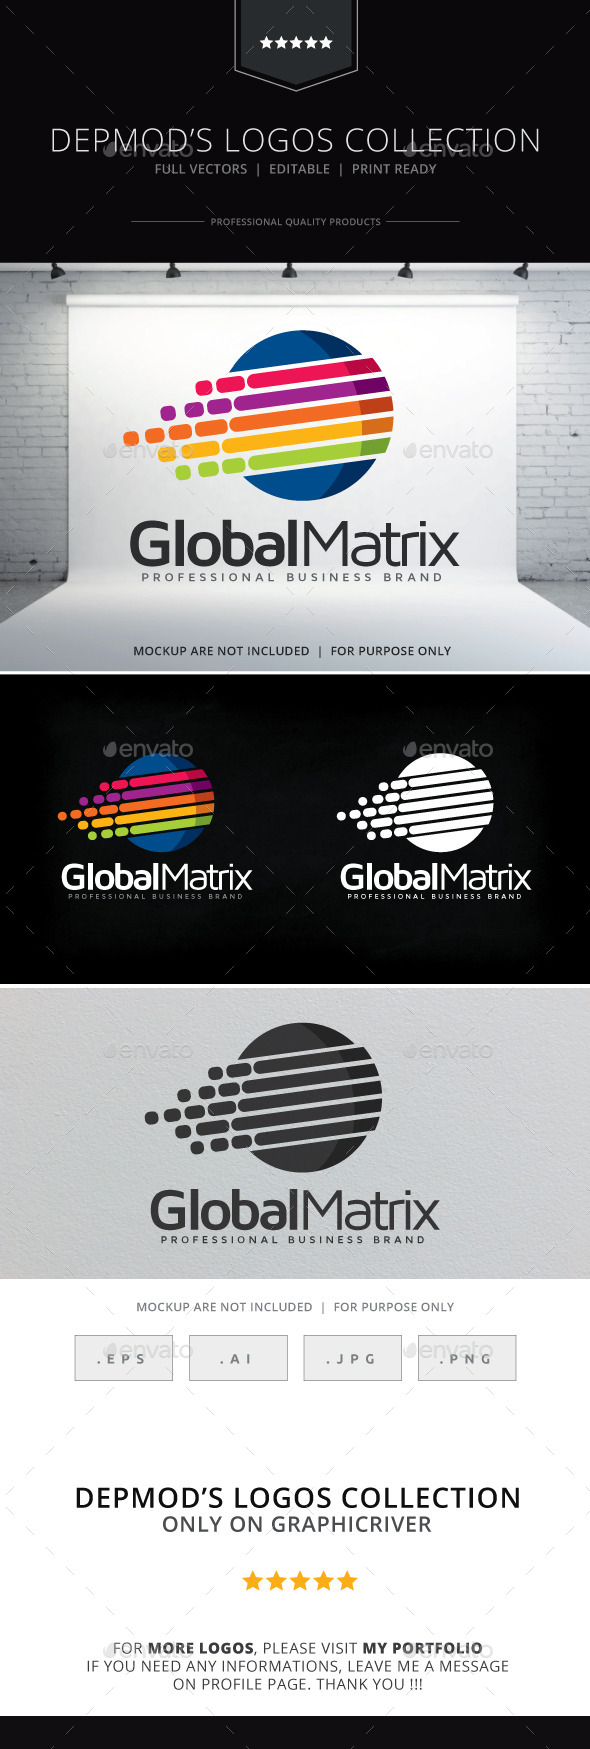 Global Matrix Logo